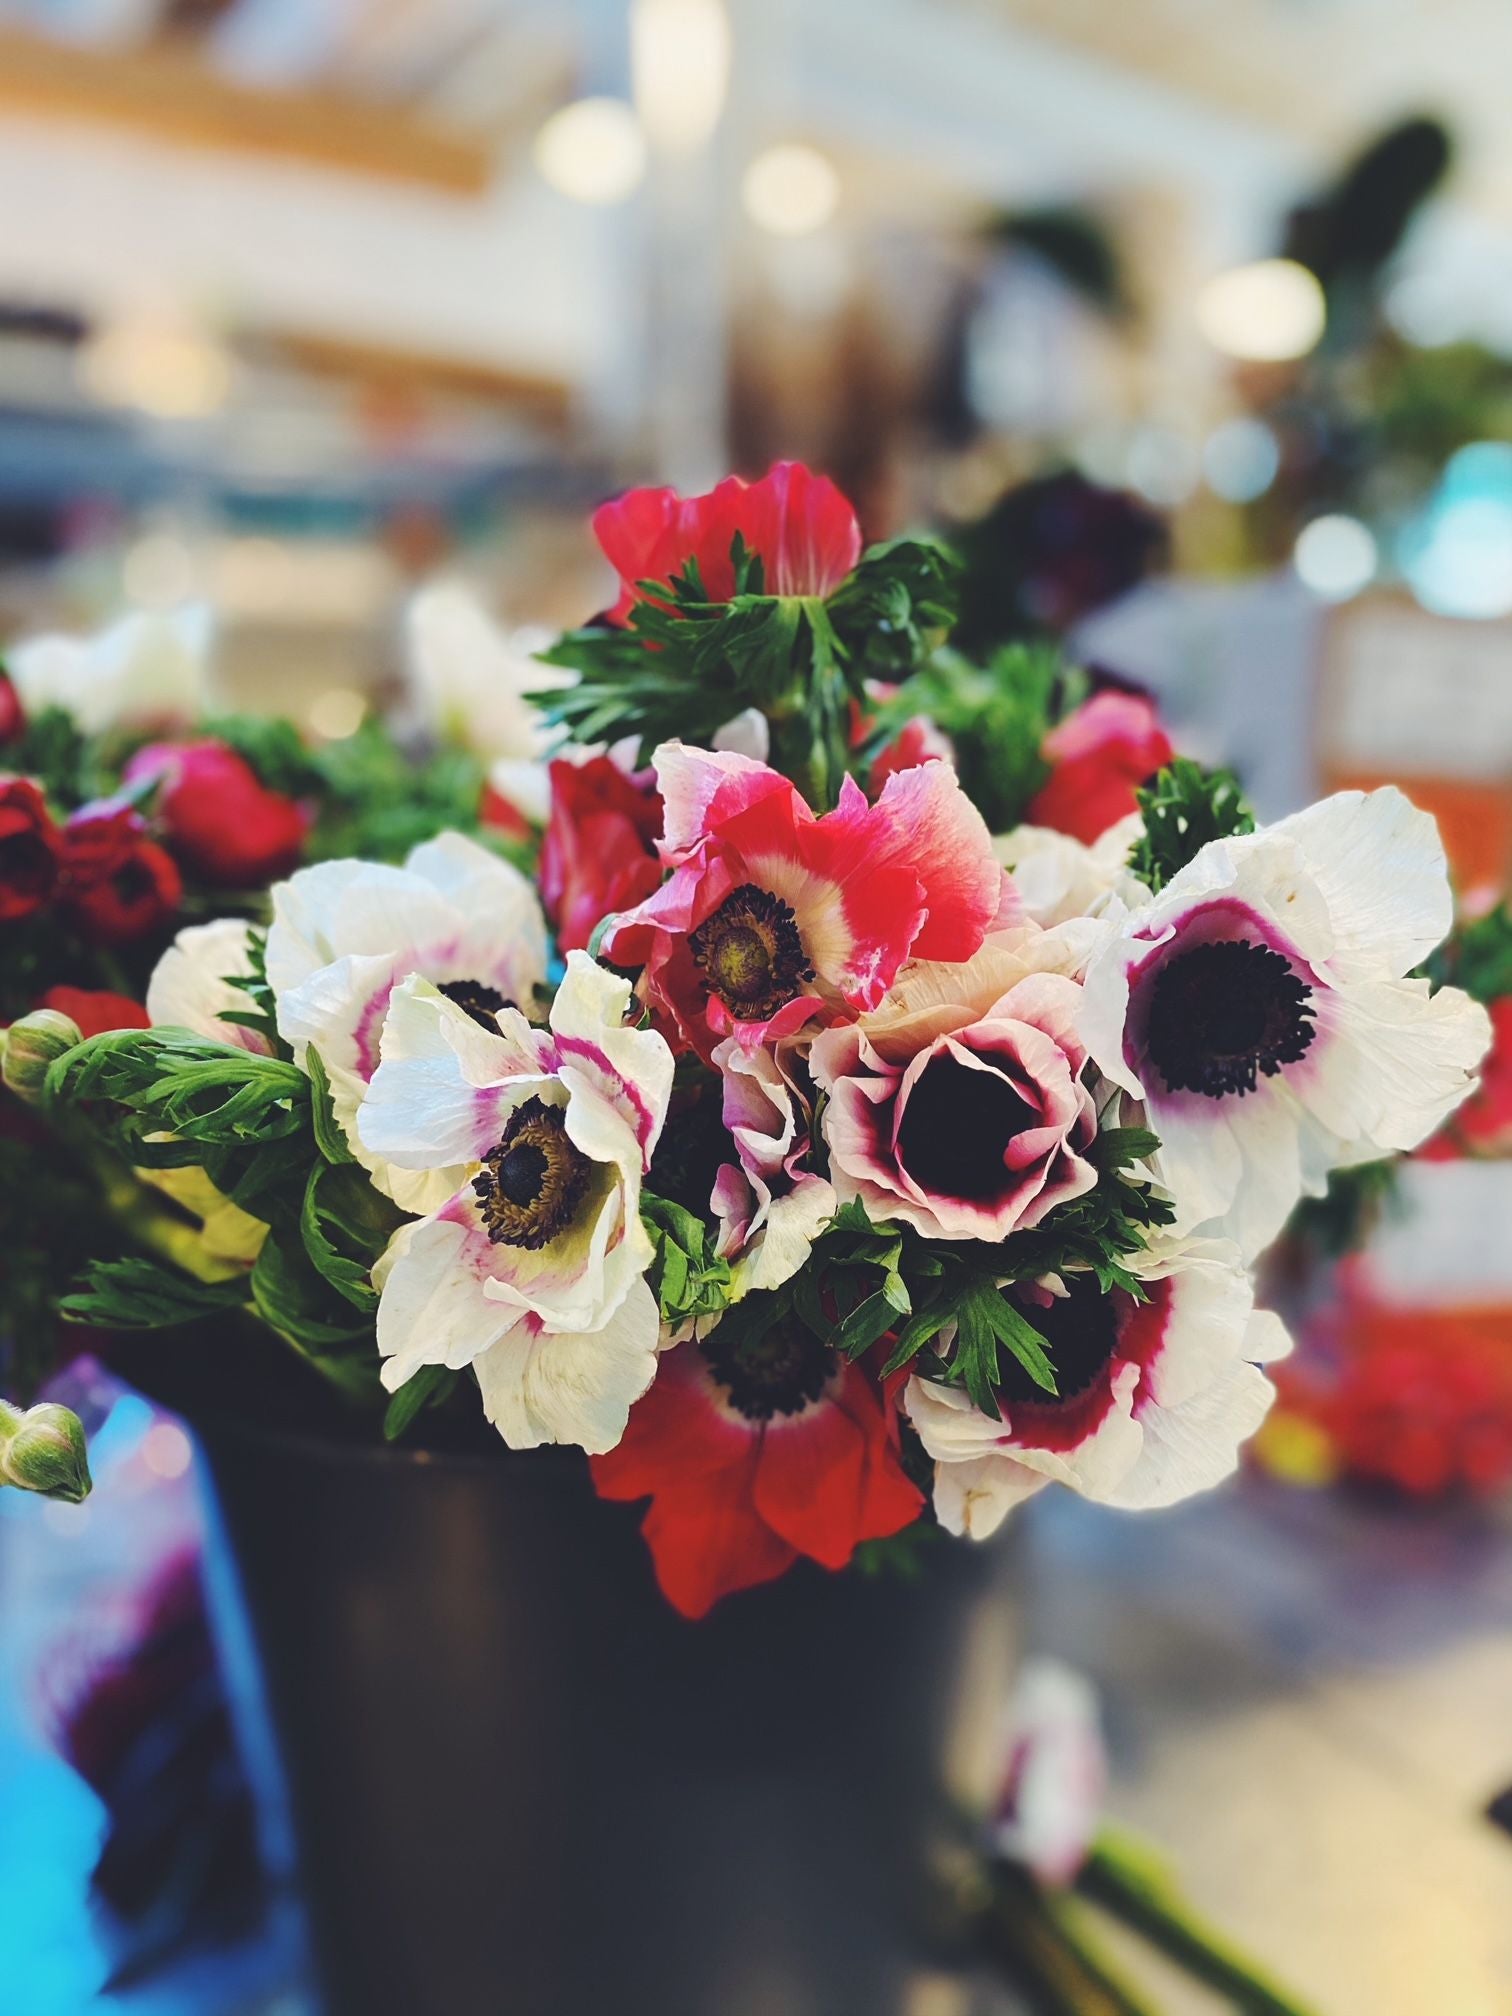 Let's talk Anemone | Flower spotlight